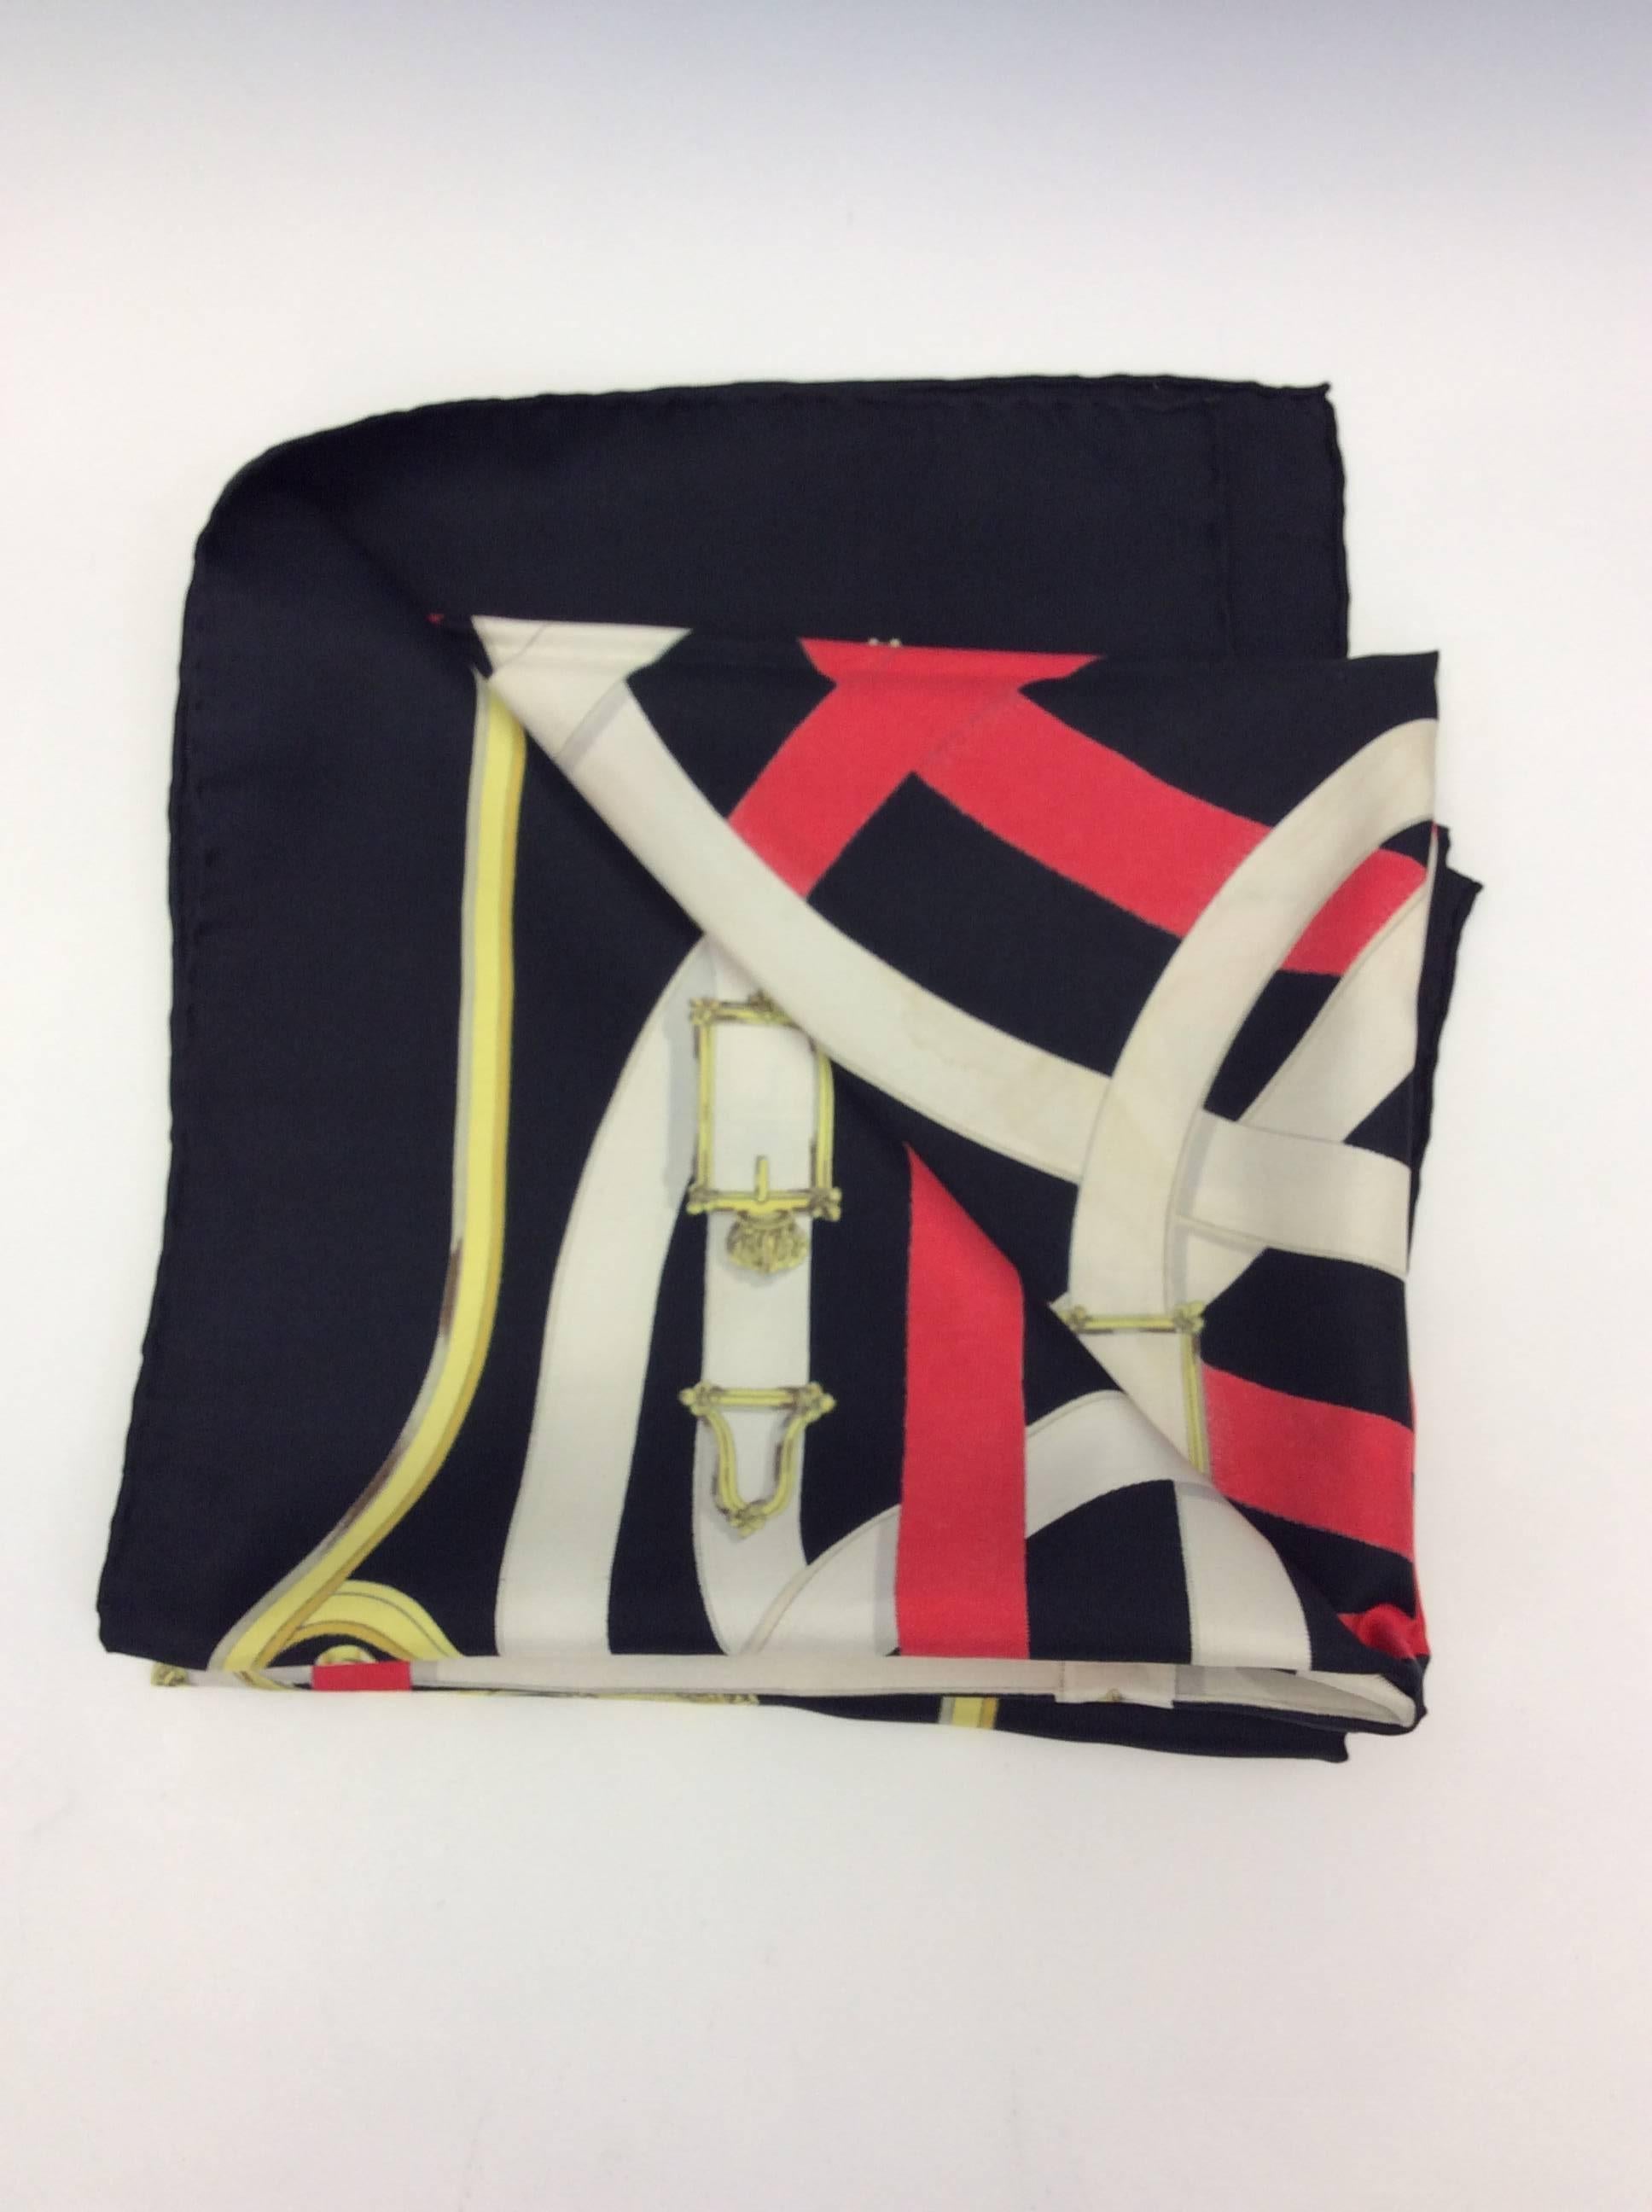 Hermes Black Red Printed Silk Scarf
35X35
$250
Made in France
100% silk 